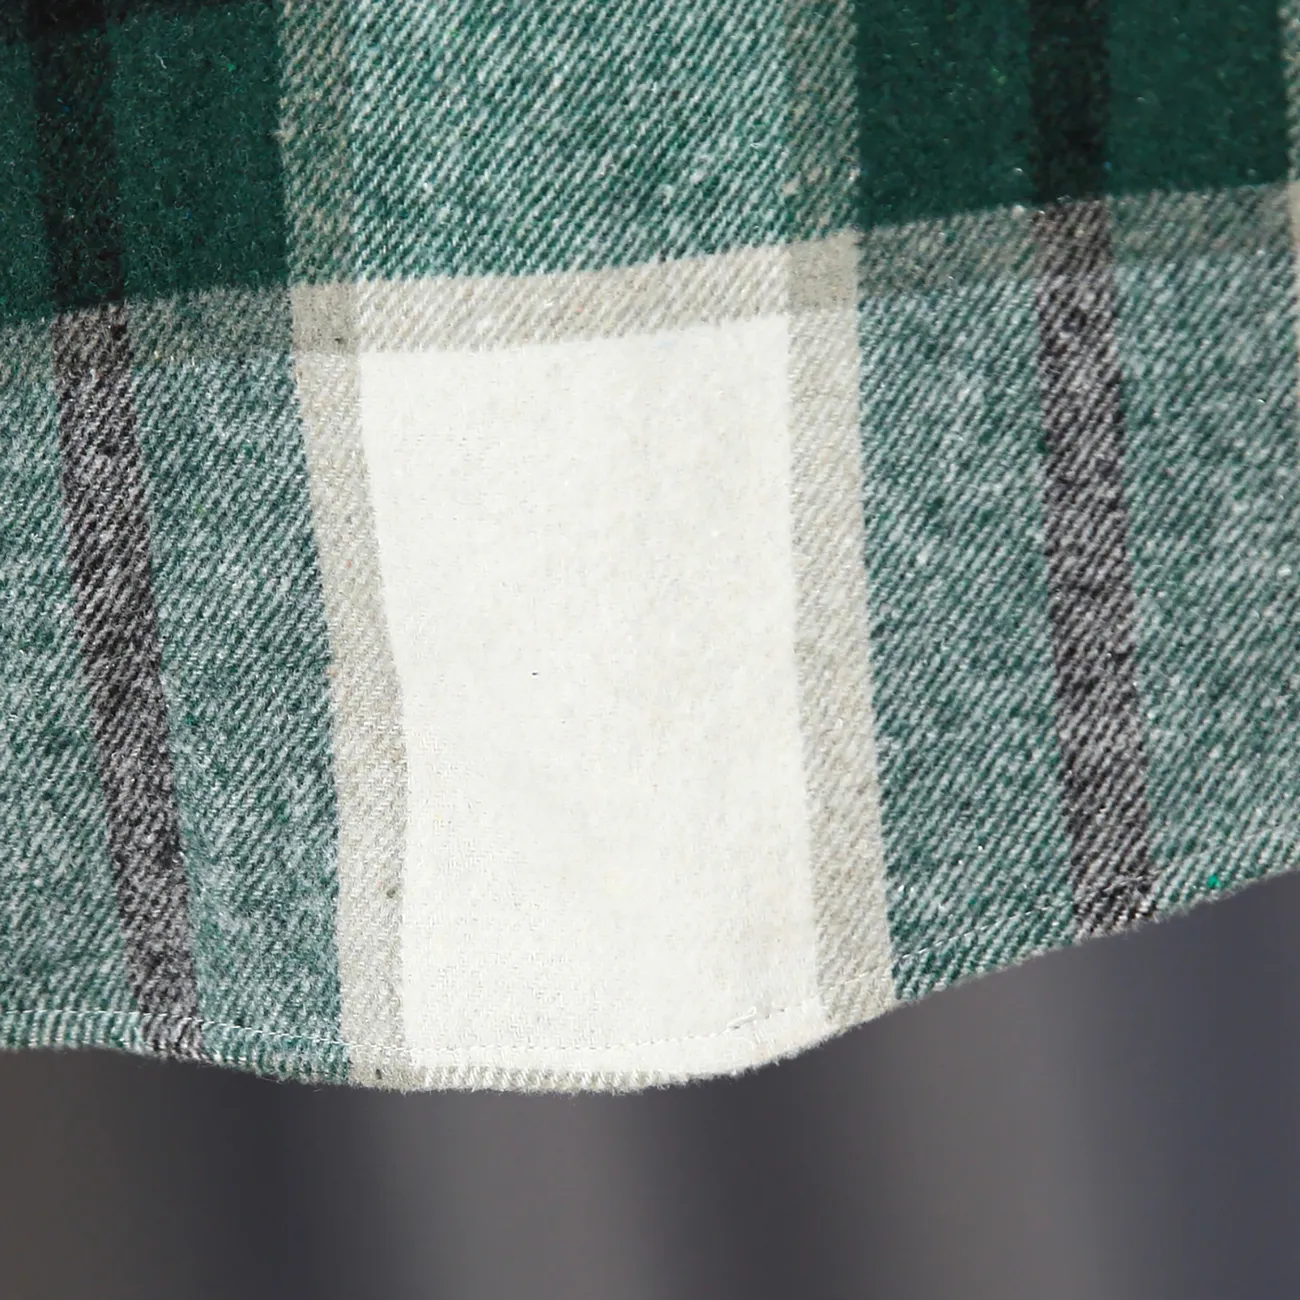 Toddler Girl/Boy 100% Cotton Button Design Plaid Hooded Jacket Green big image 1